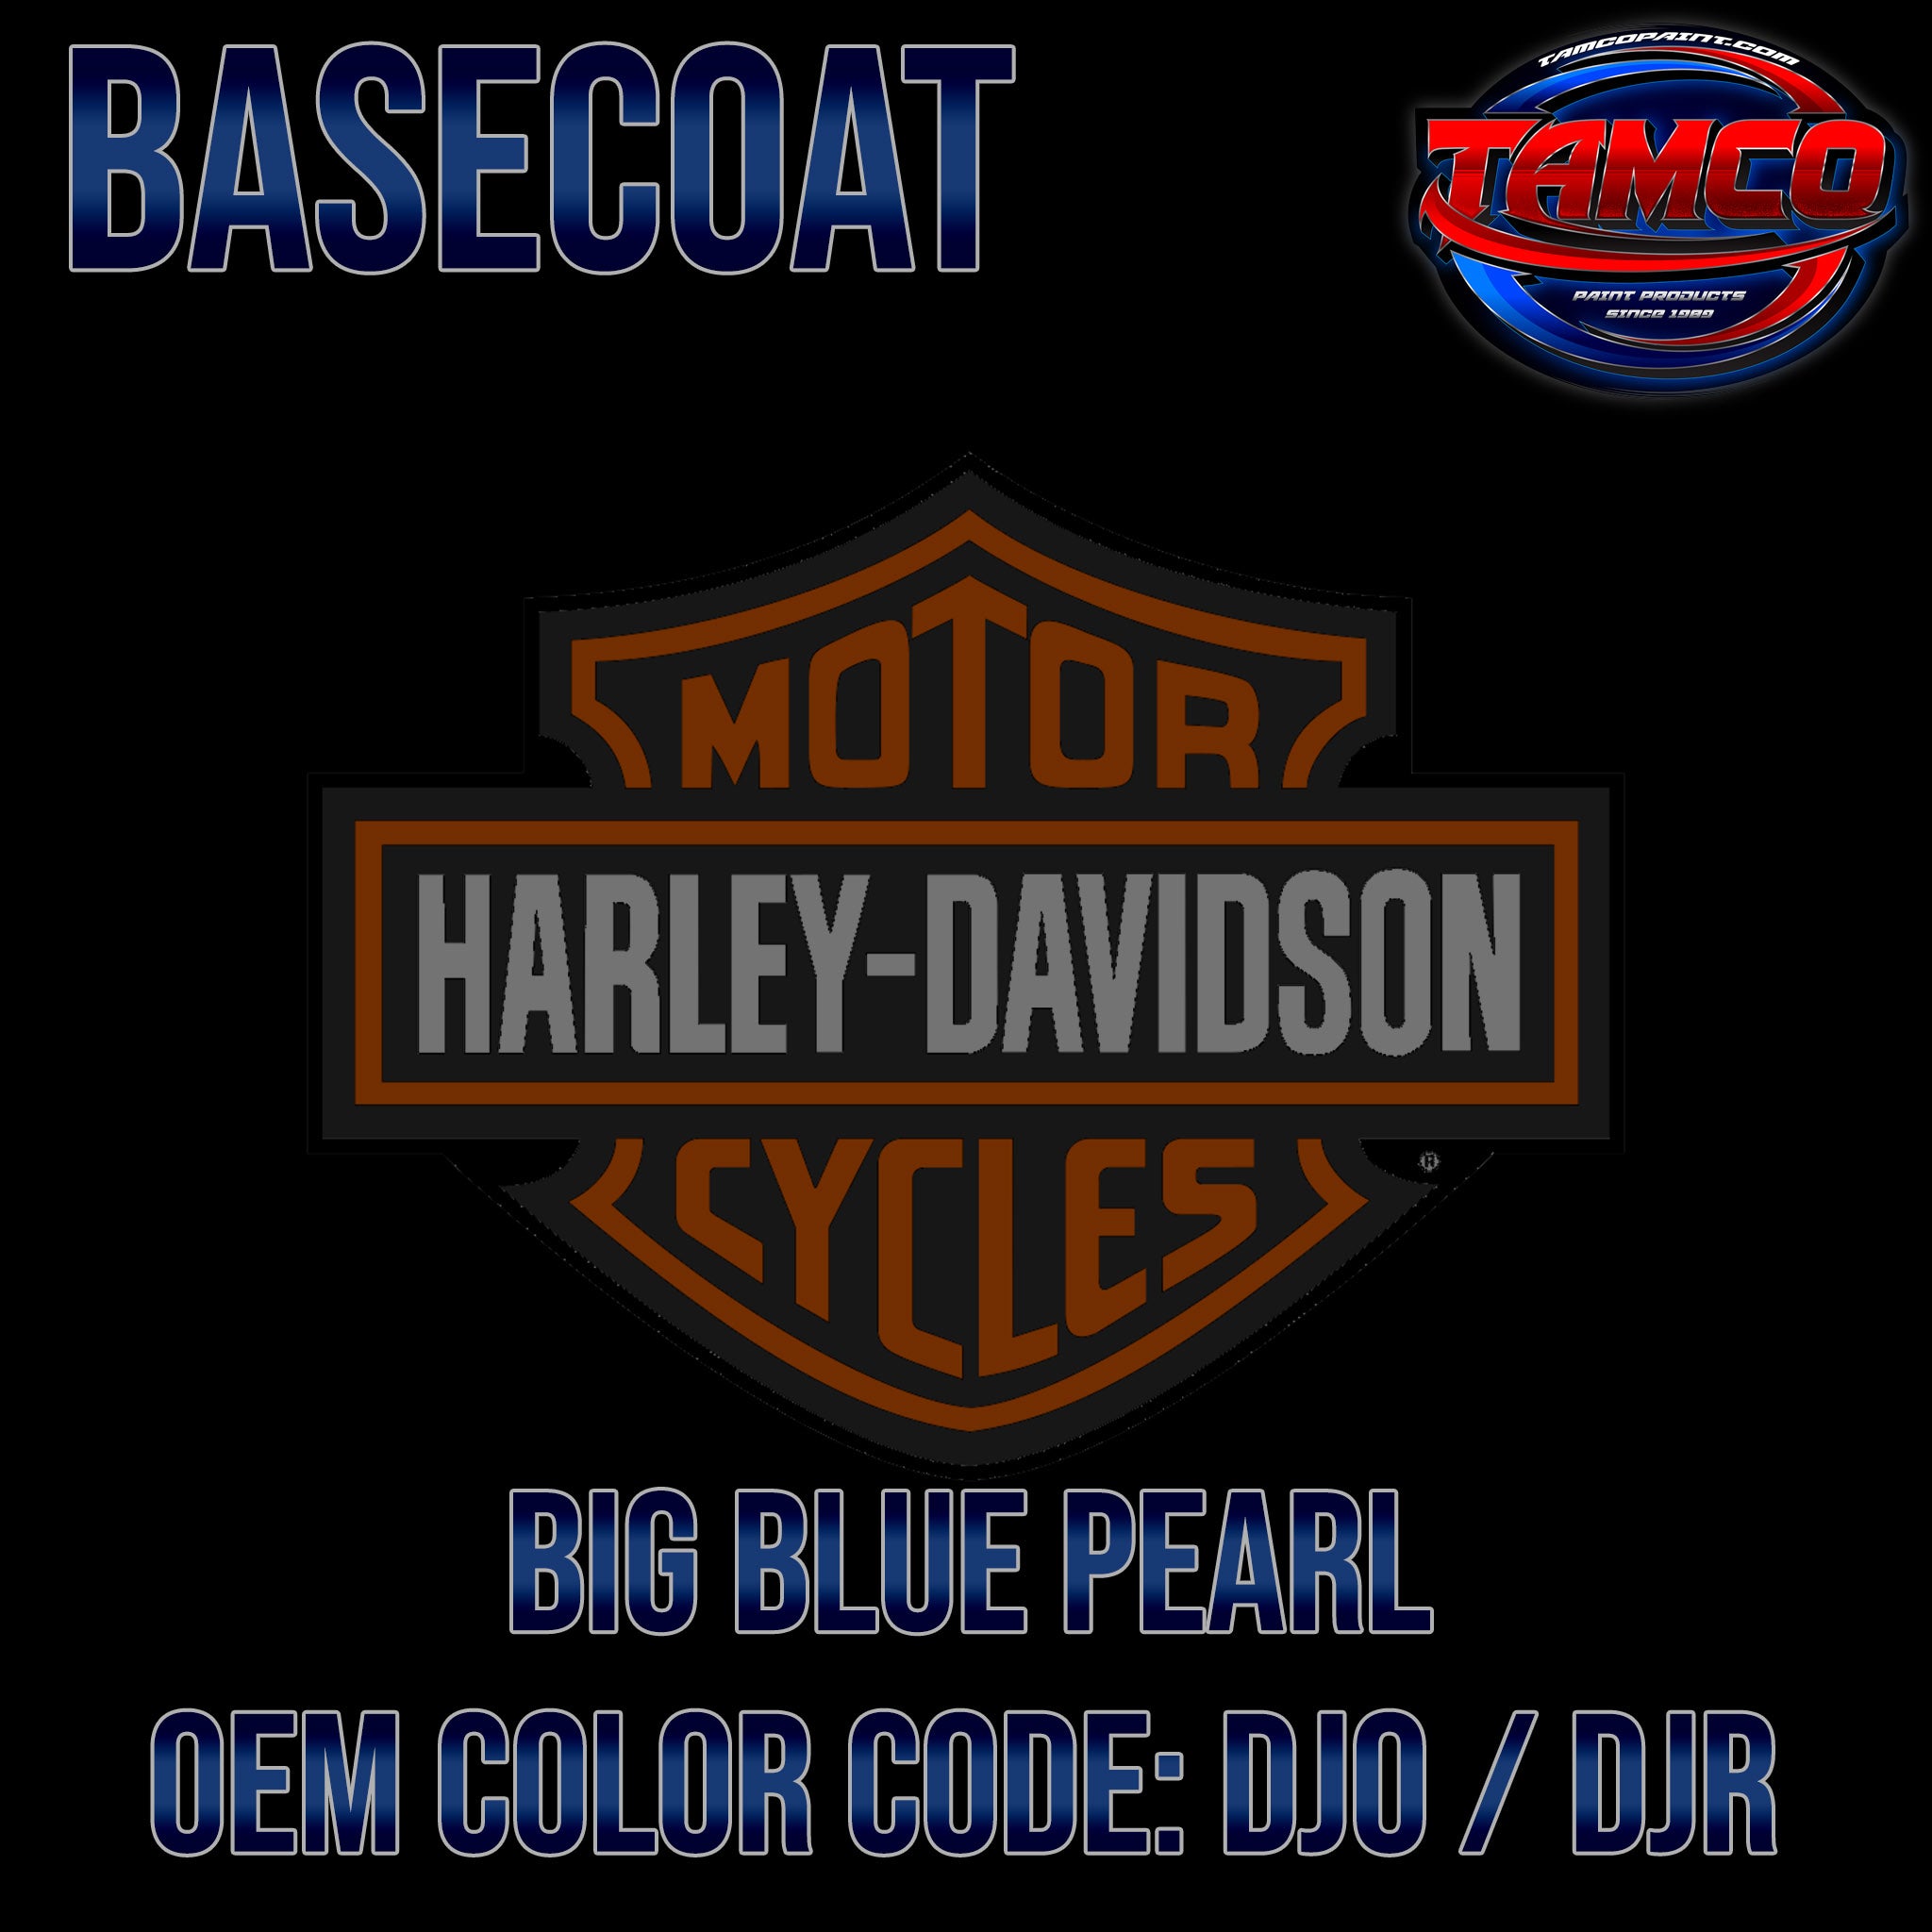 Big Blue Pearl Basecoat Clear Coat Car Paint and Kit Options